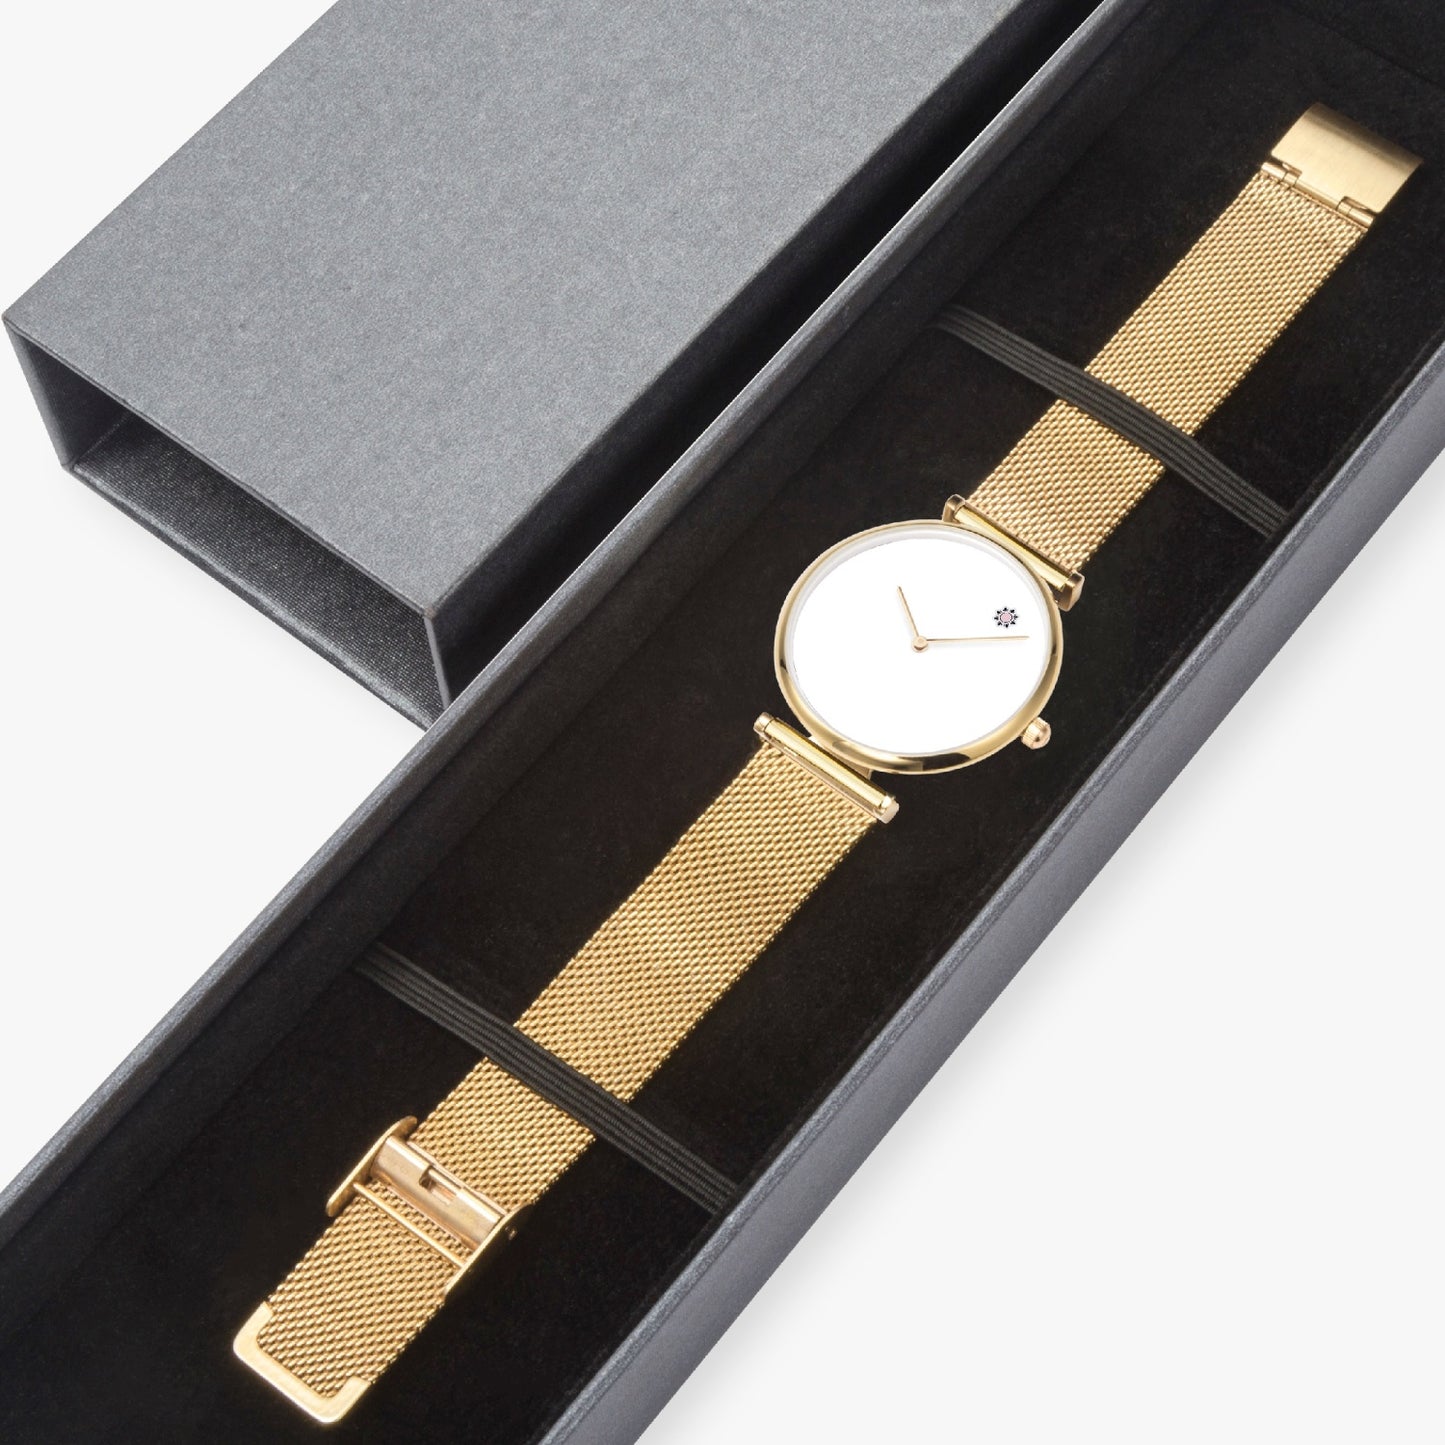 New Stylish Ultra-Thin Quartz Watch, Sunshine, Gifts for her